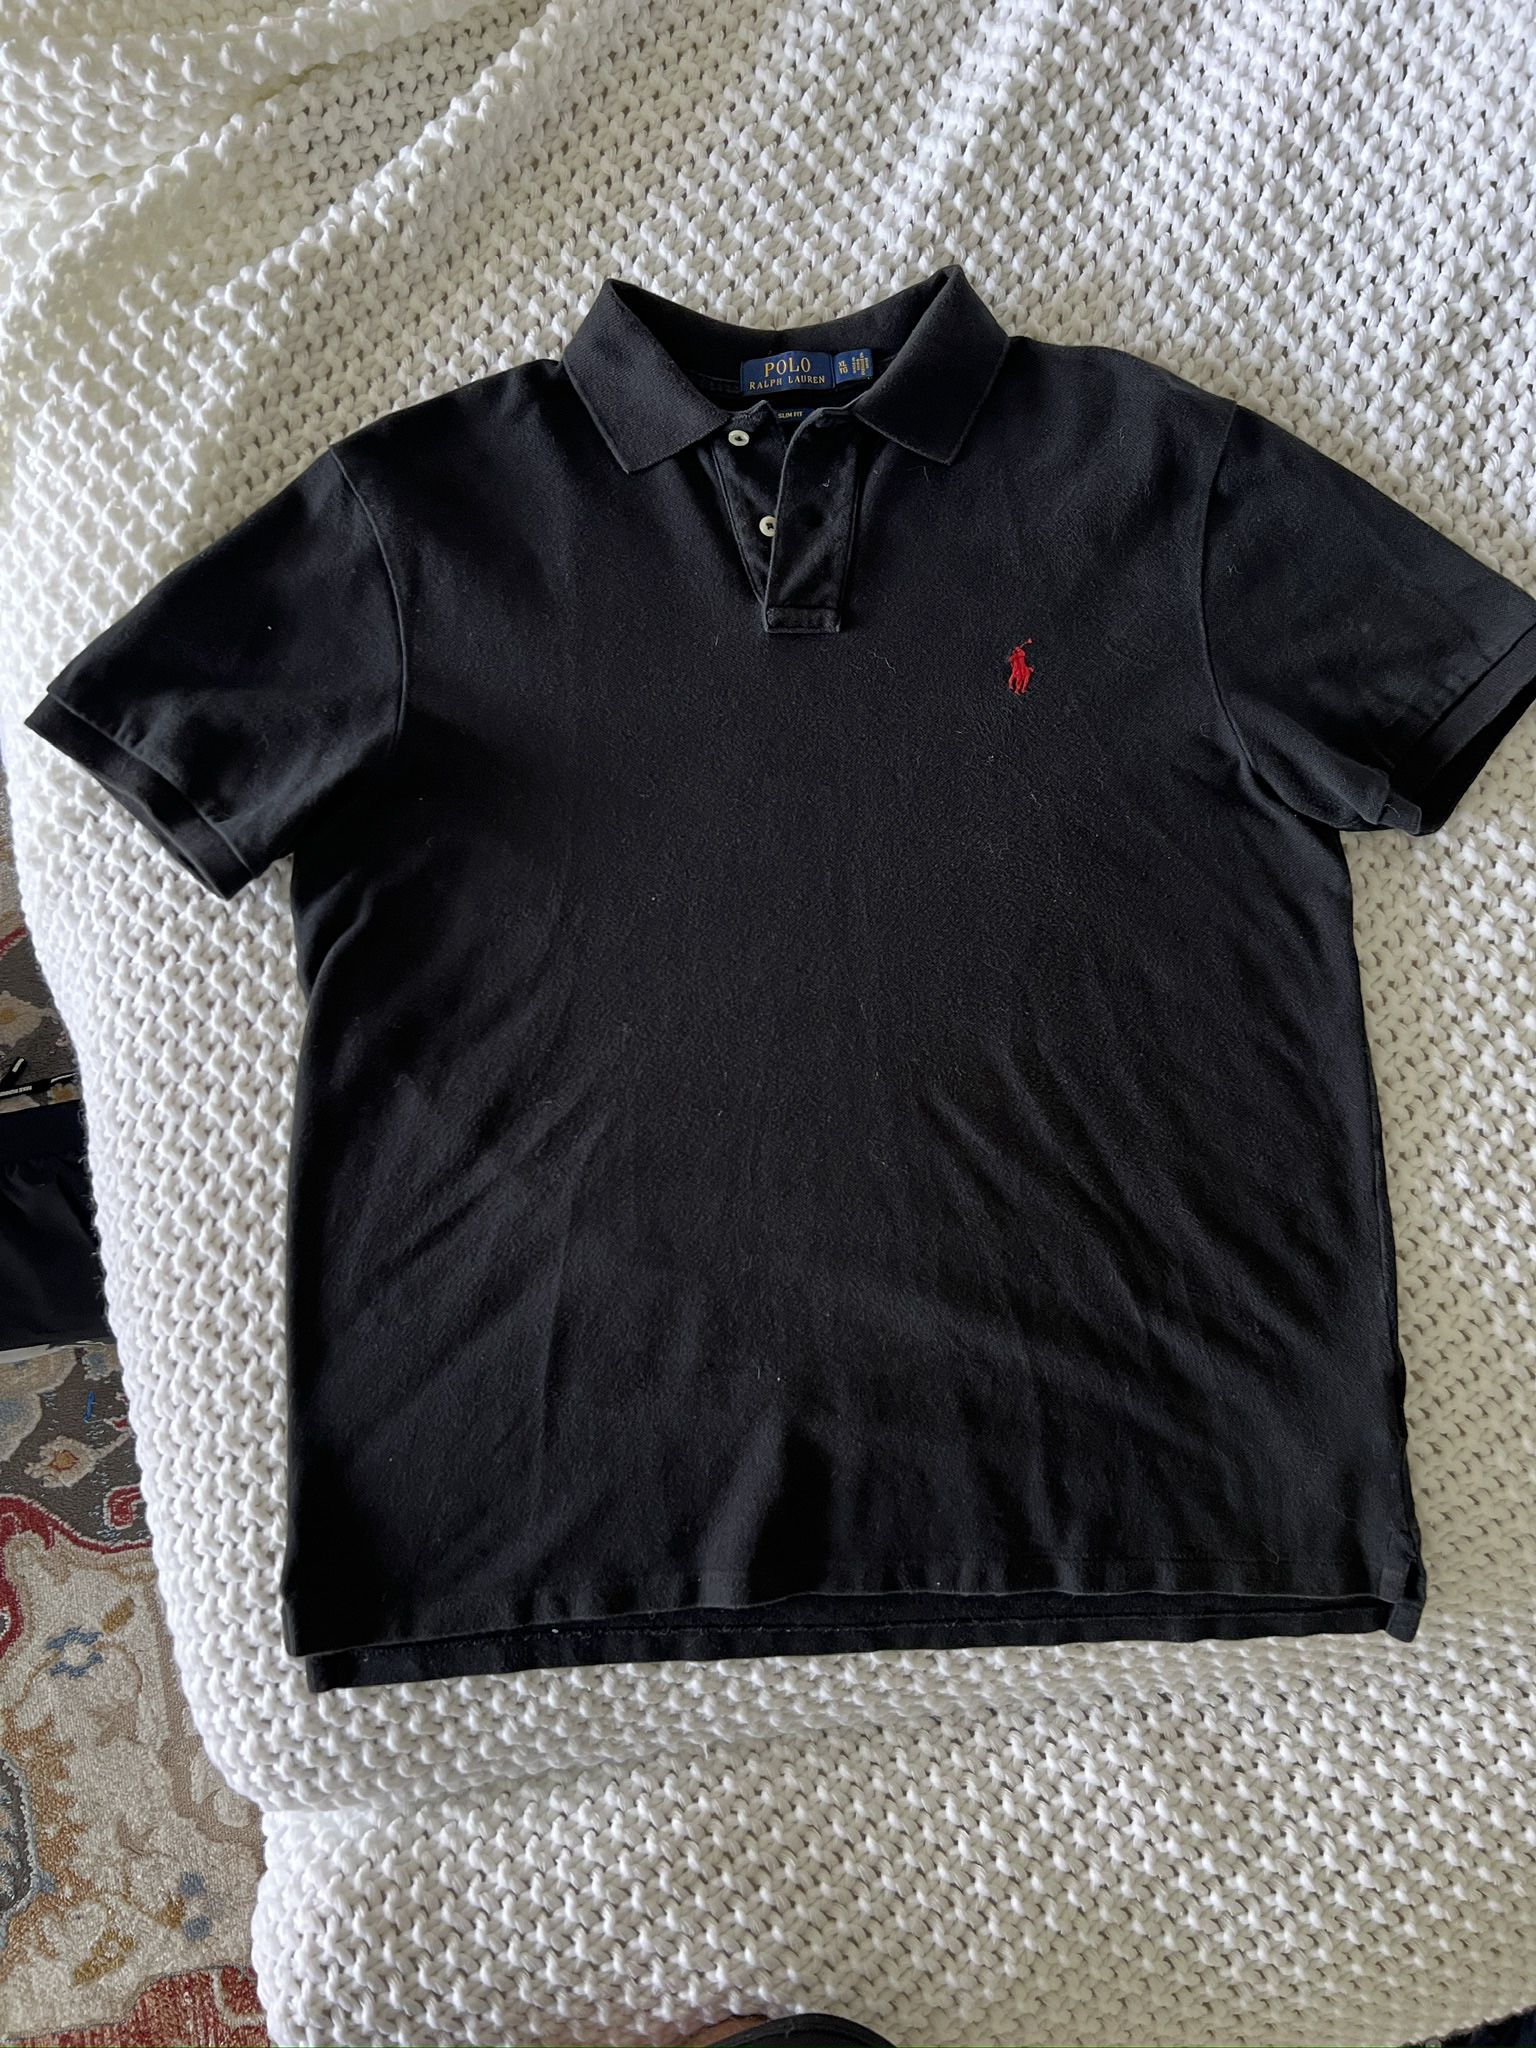 Polo Ralph Lauren Black Collared Shirt size XL